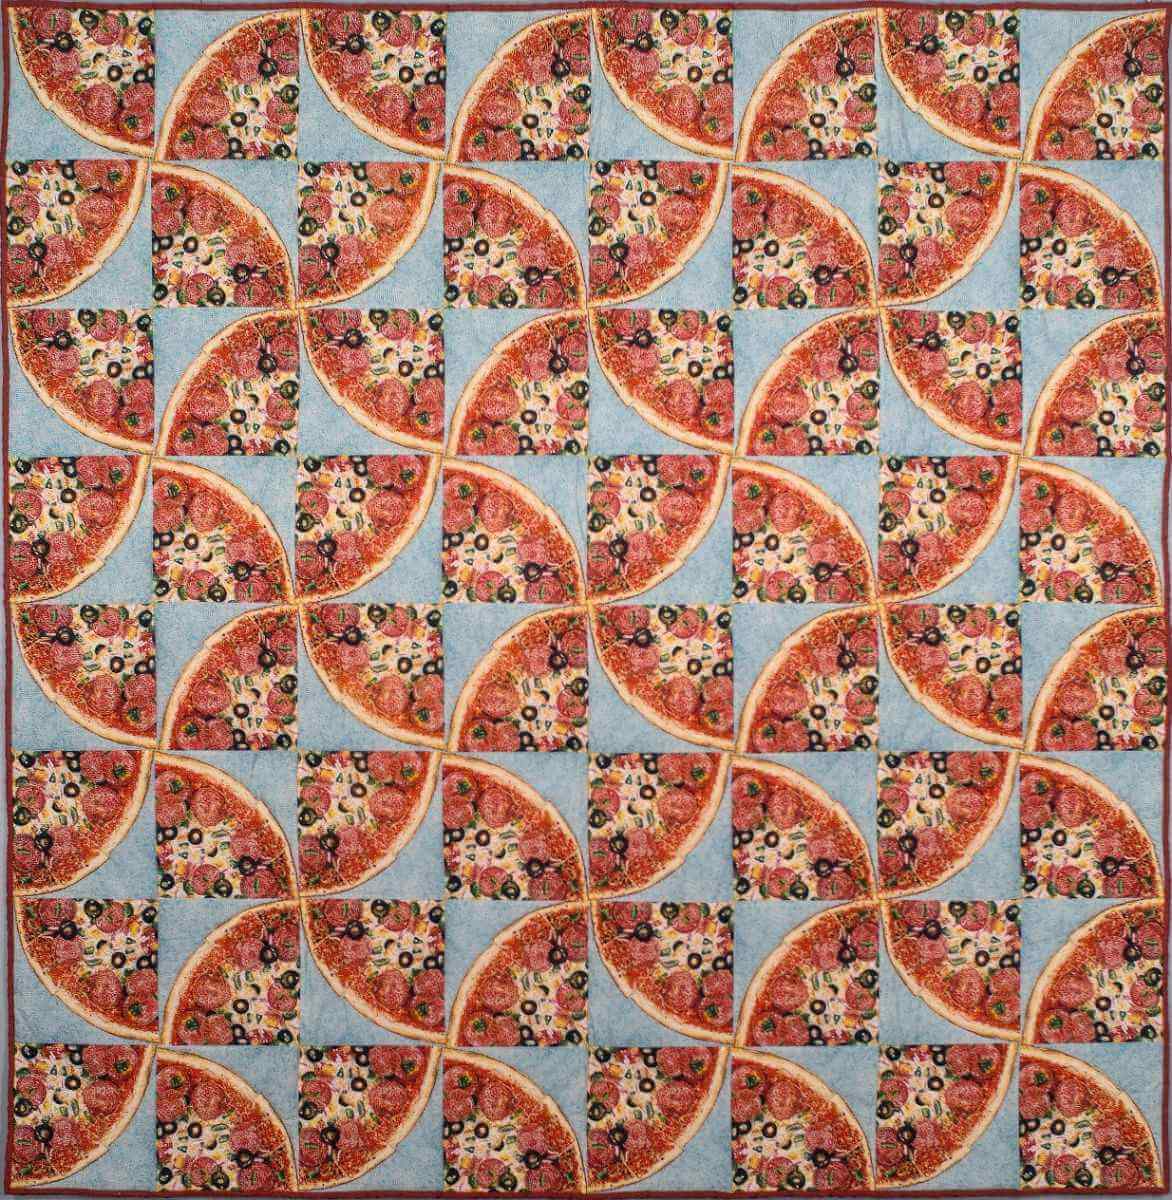 Pizza Slice Quilt, 1990